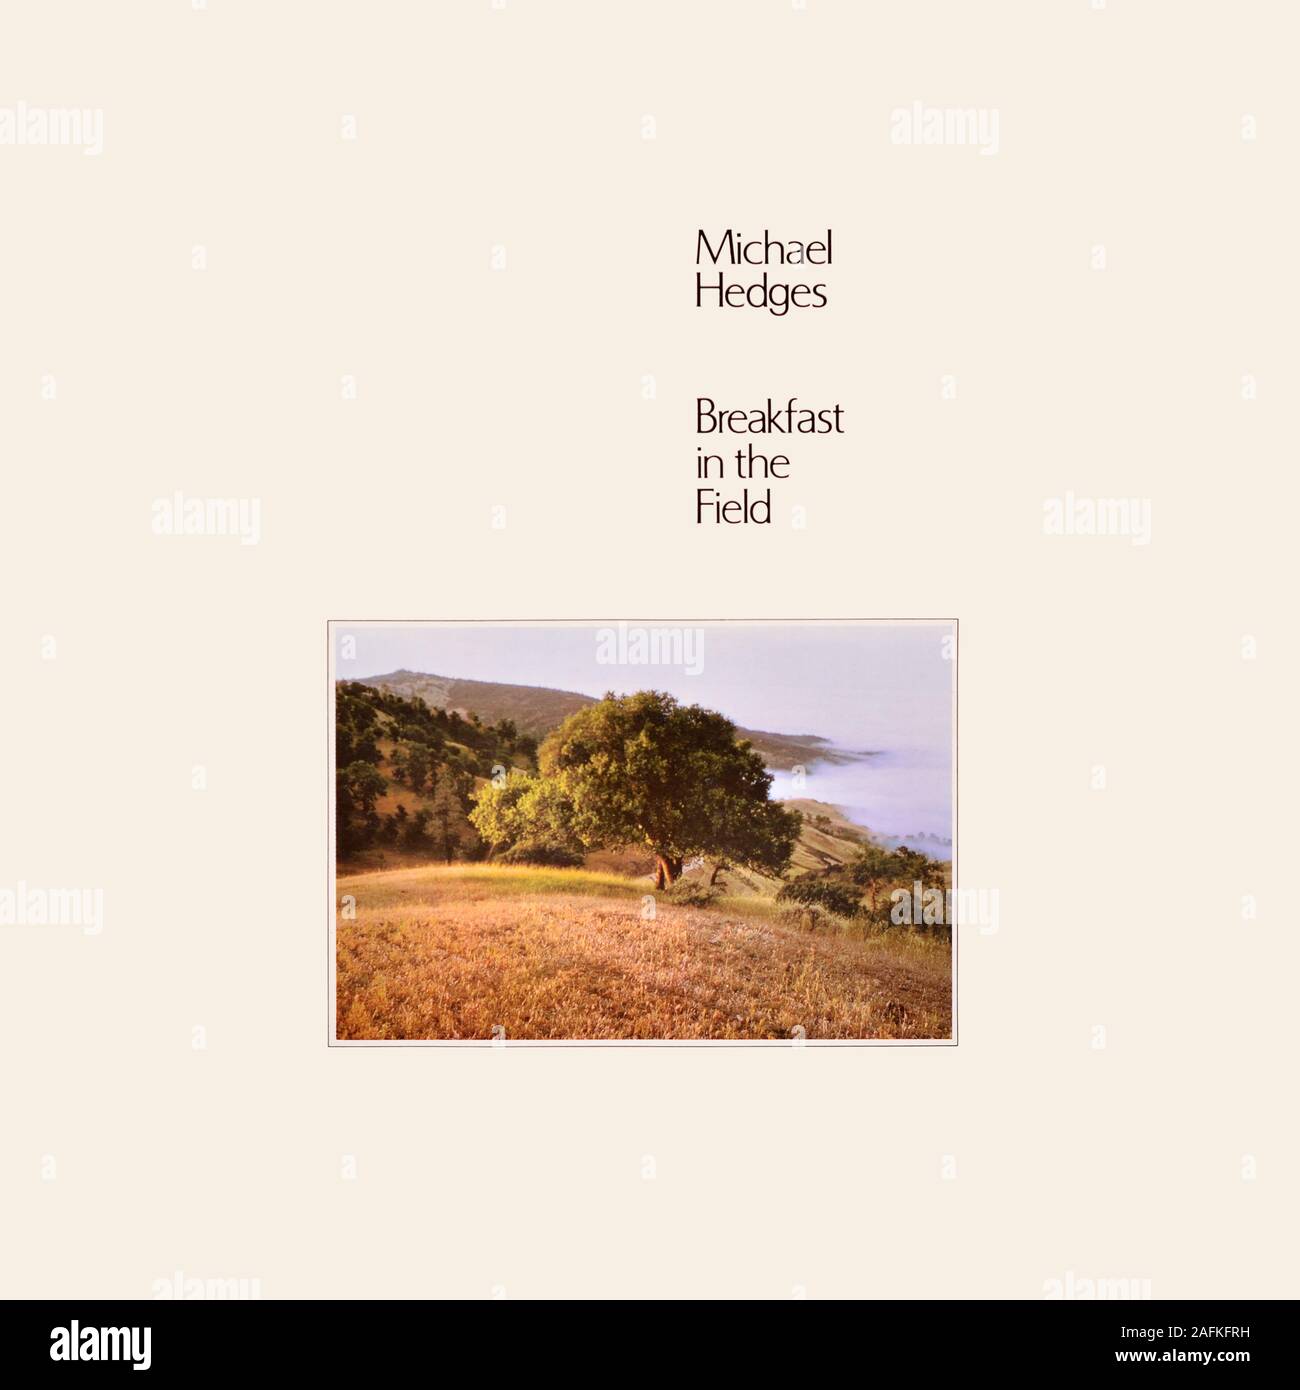 Michael Hedges - original Vinyl Album Cover - Breakfast in the Field - 1981 Stockfoto